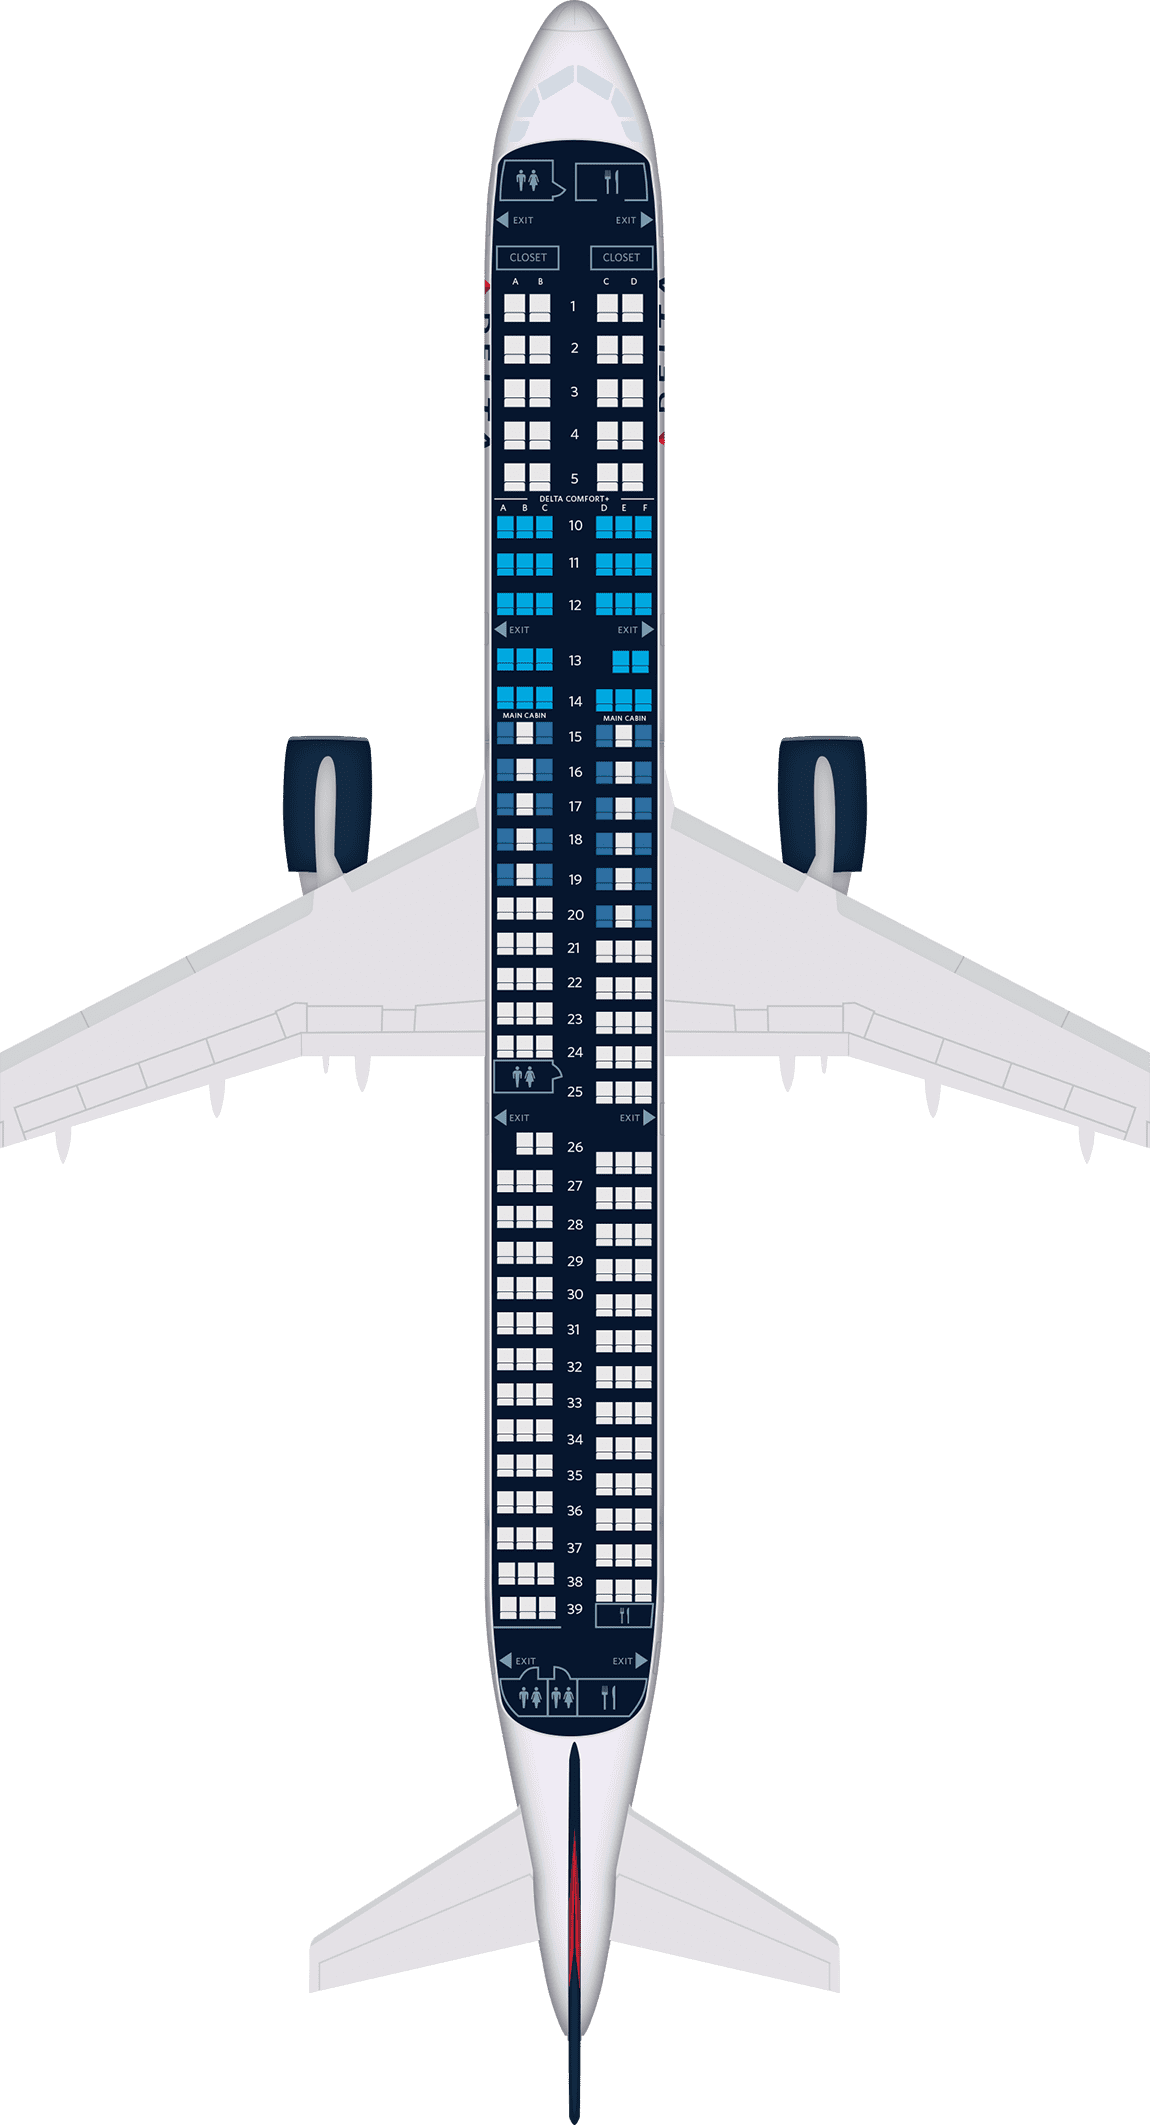 arj21飞机座位布置图图片